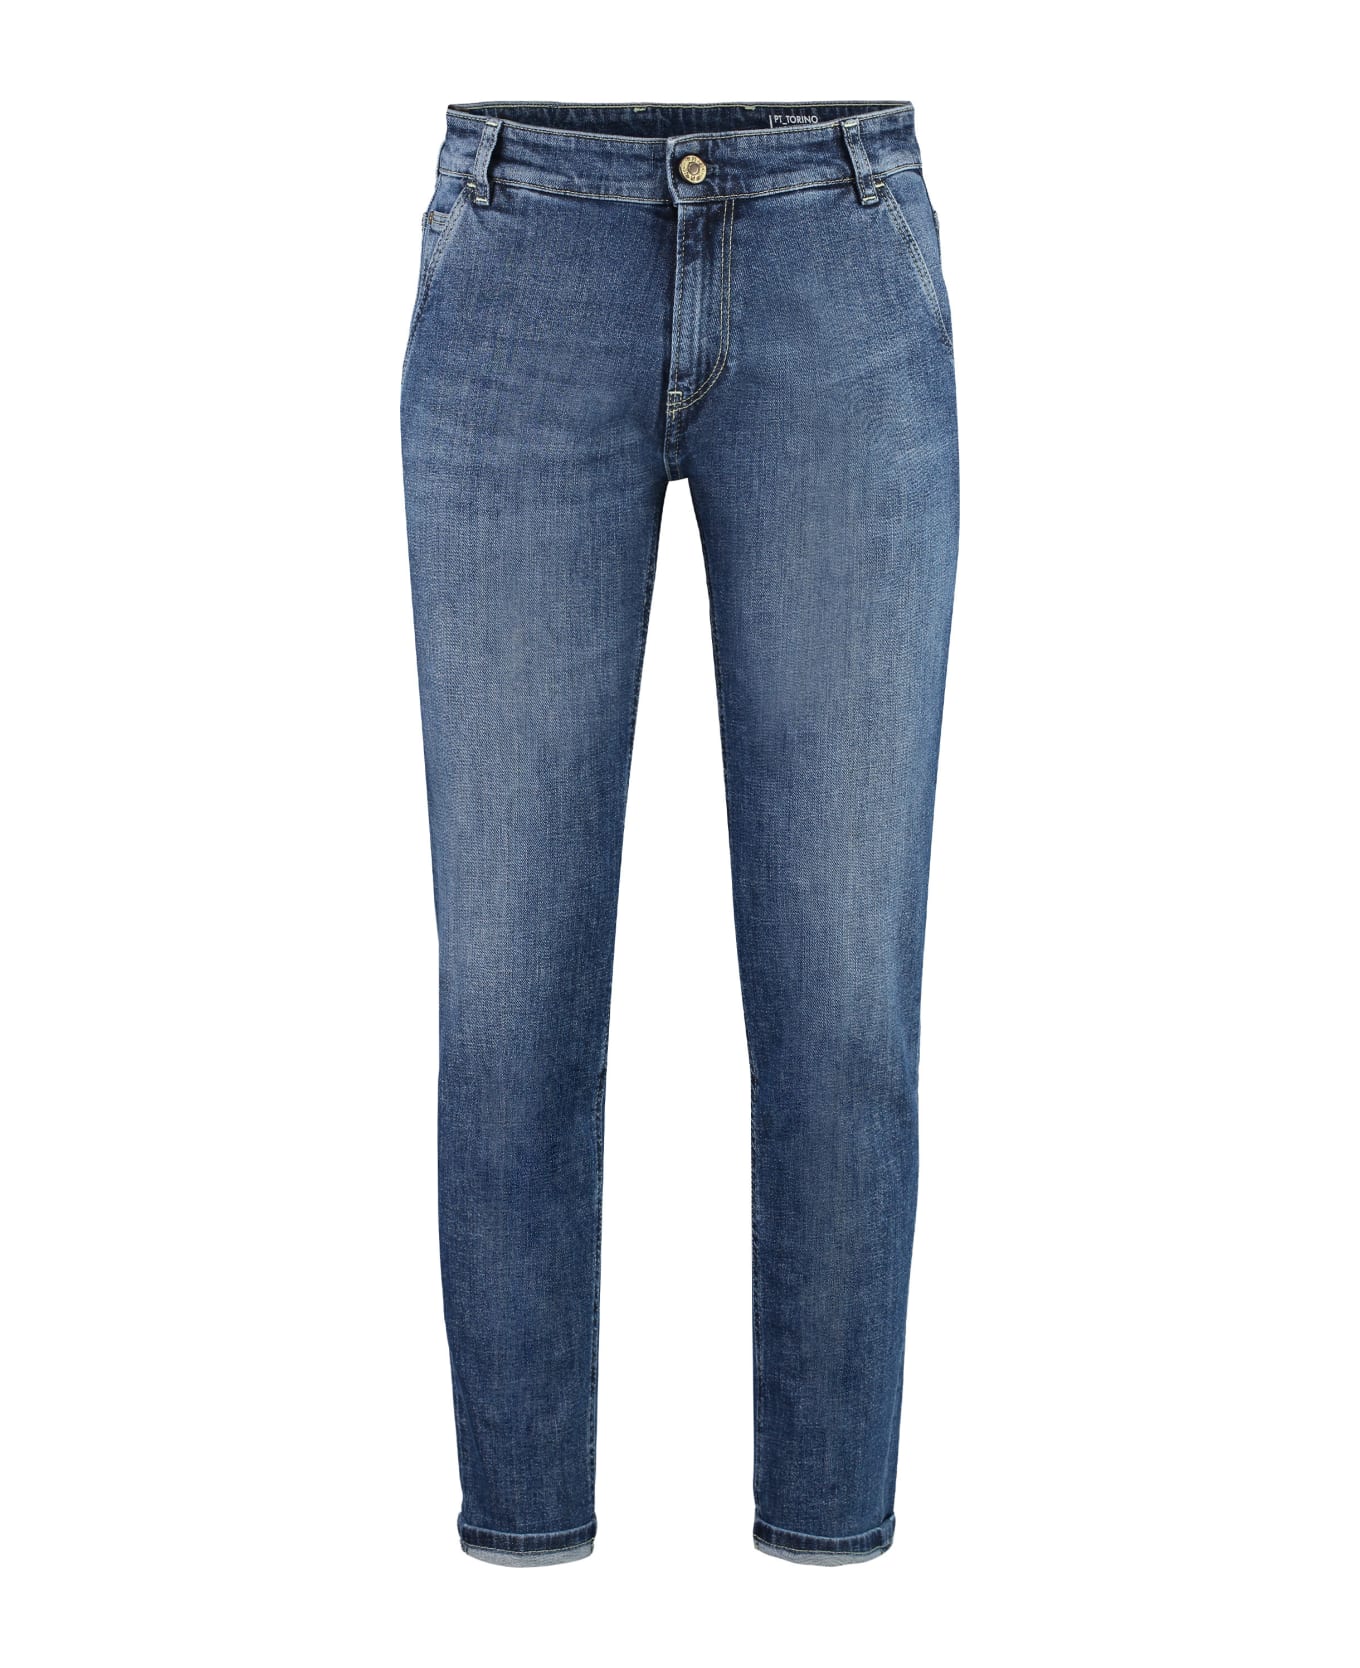 PT Torino Indie Slim Fit Jeans - Denim